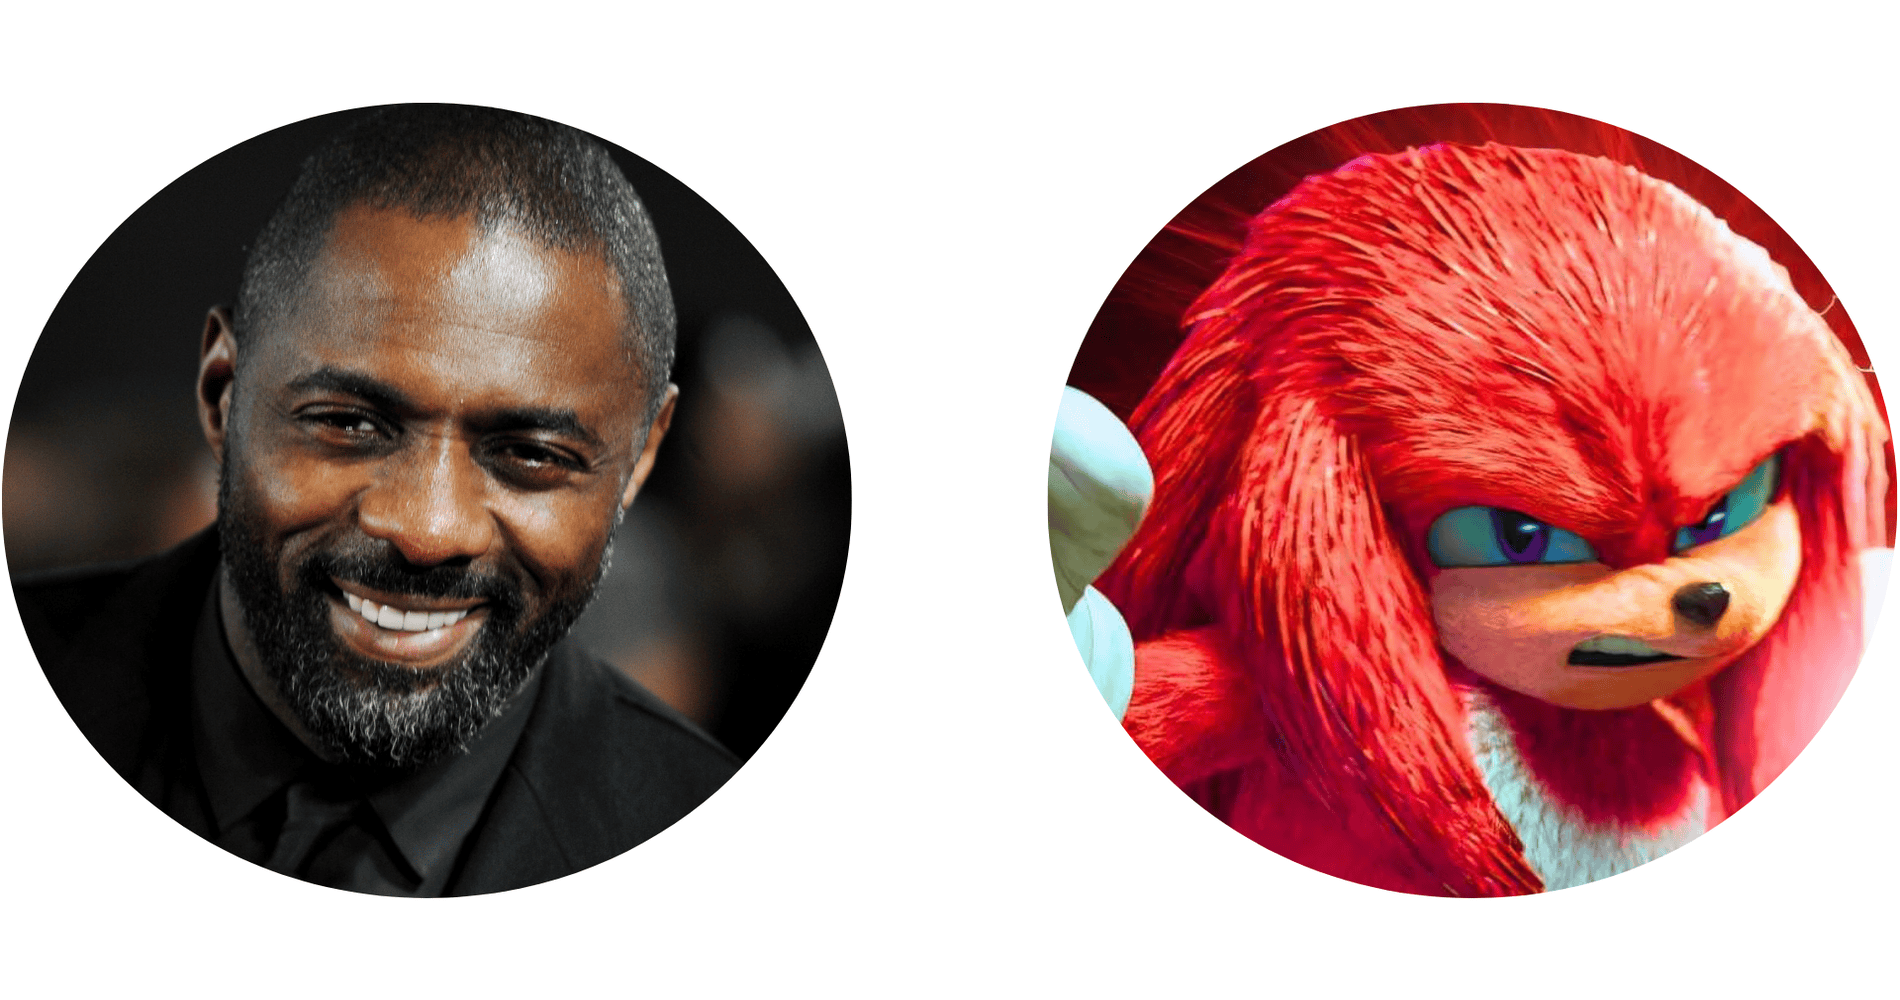 sonic the hedgehog 3 cast, Idris Elba as Knuckles